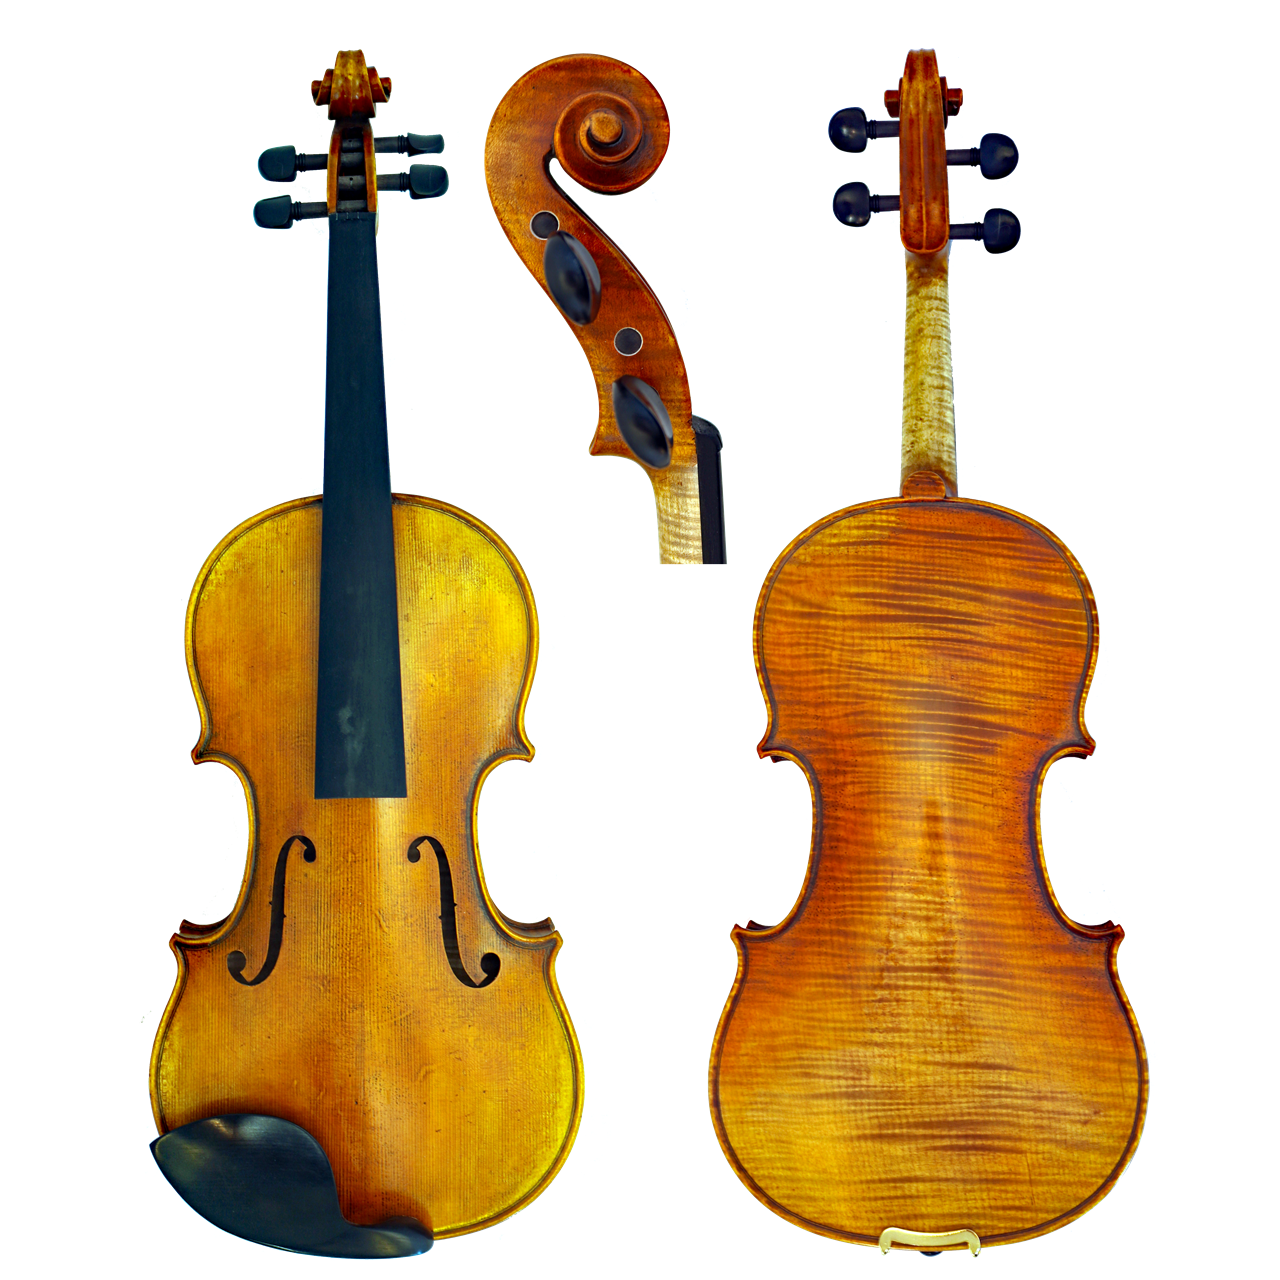 SE Violine 3/4 Fabrication Artisanal